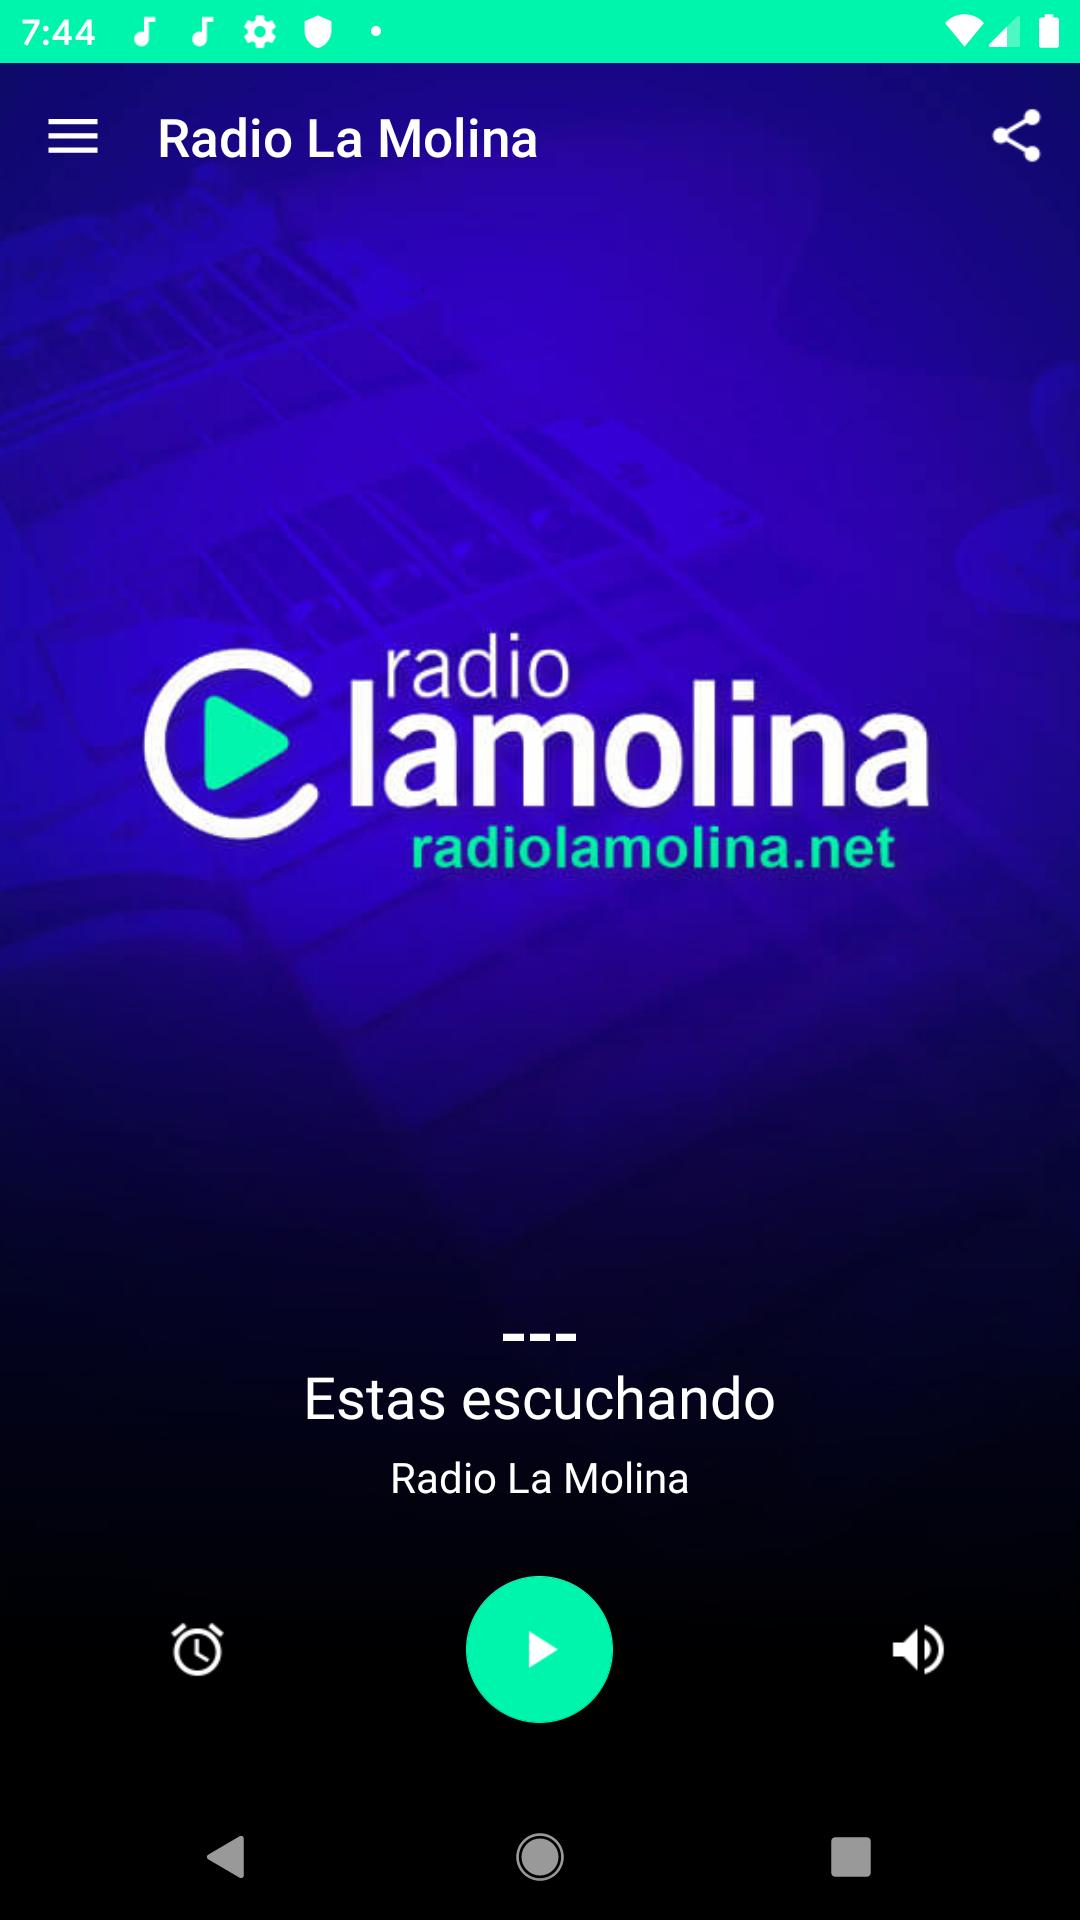 Radio La Molina for Android - APK Download